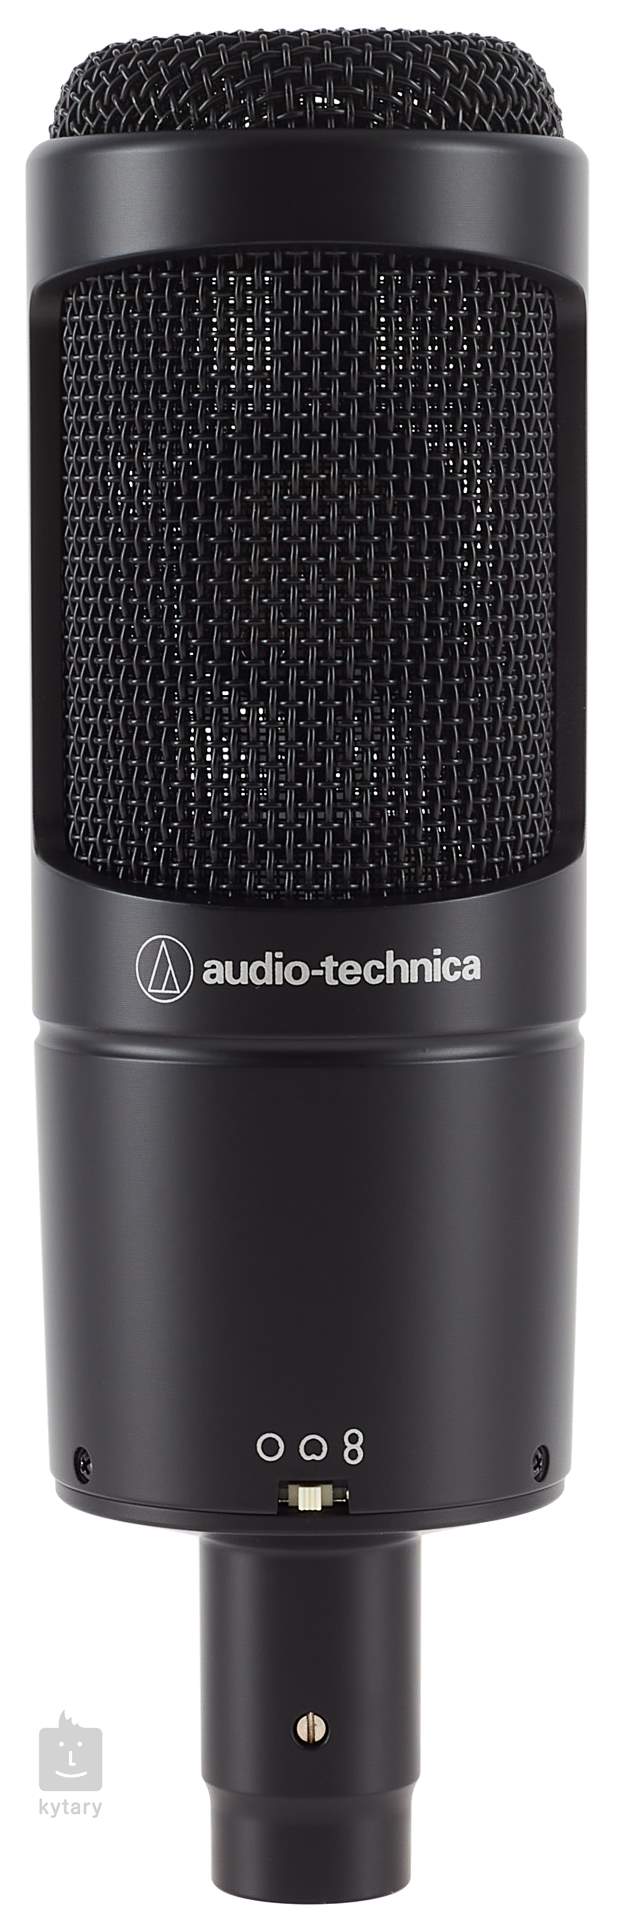 AUDIO-TECHNICA AT2050 Condenser Microphone